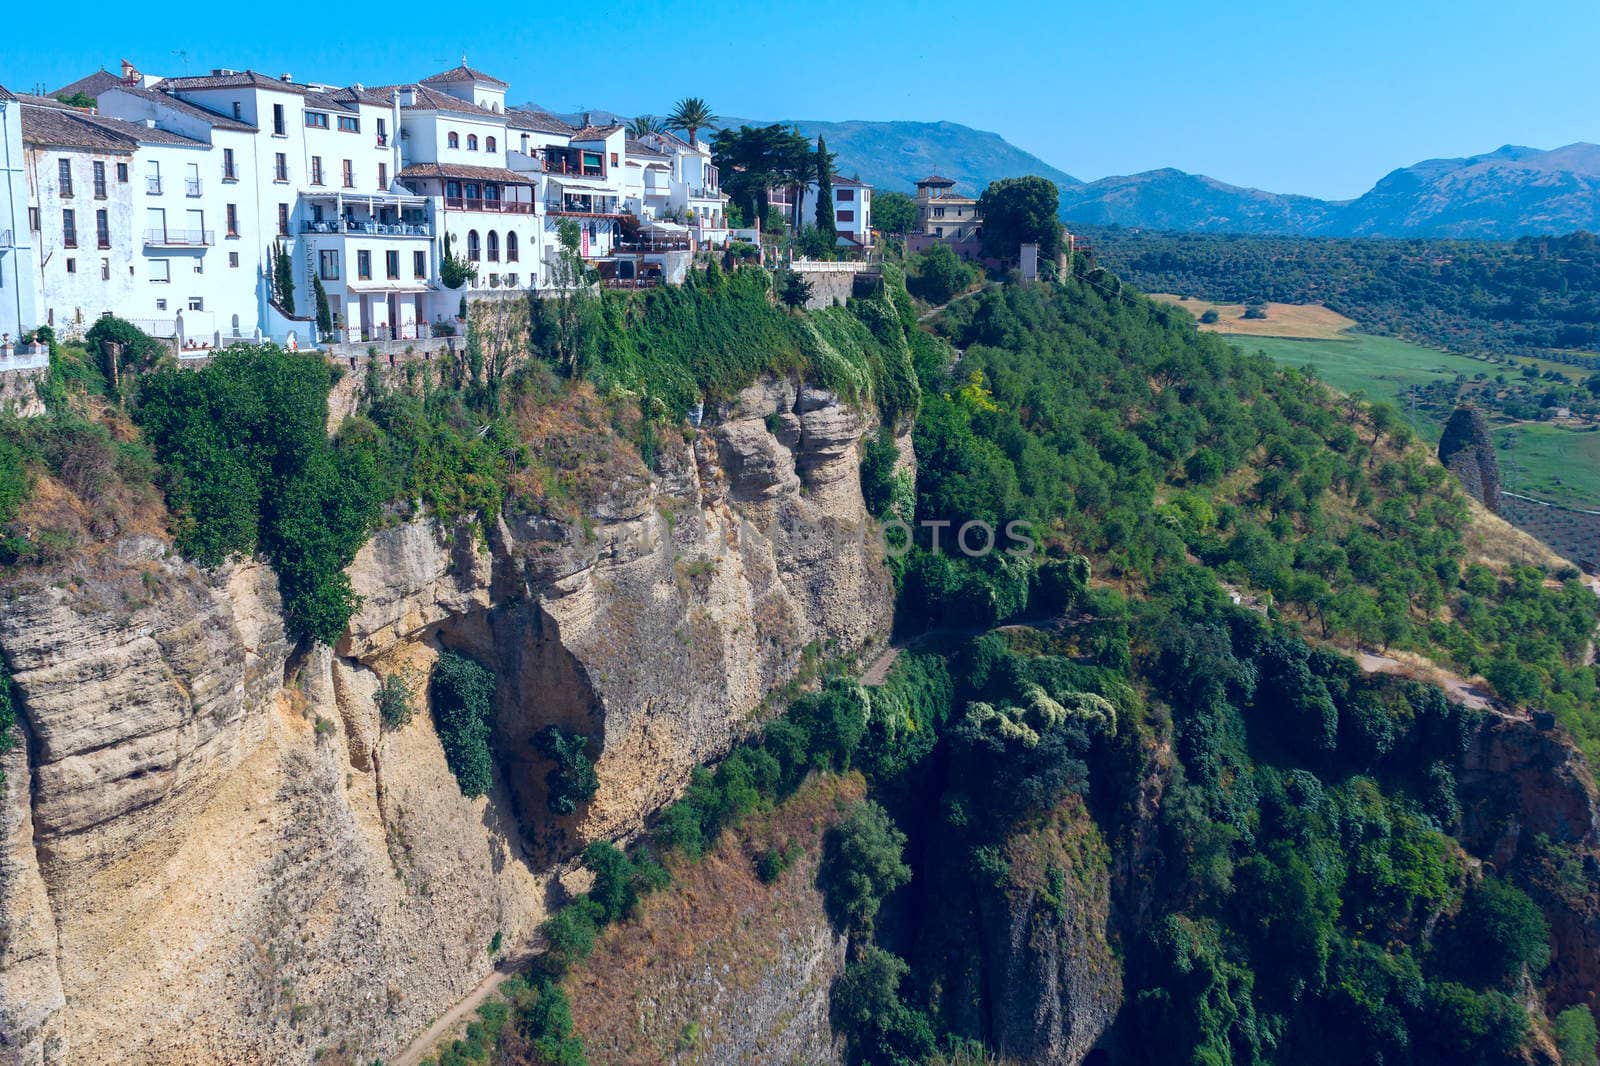 View of the Spanish city of Ronda